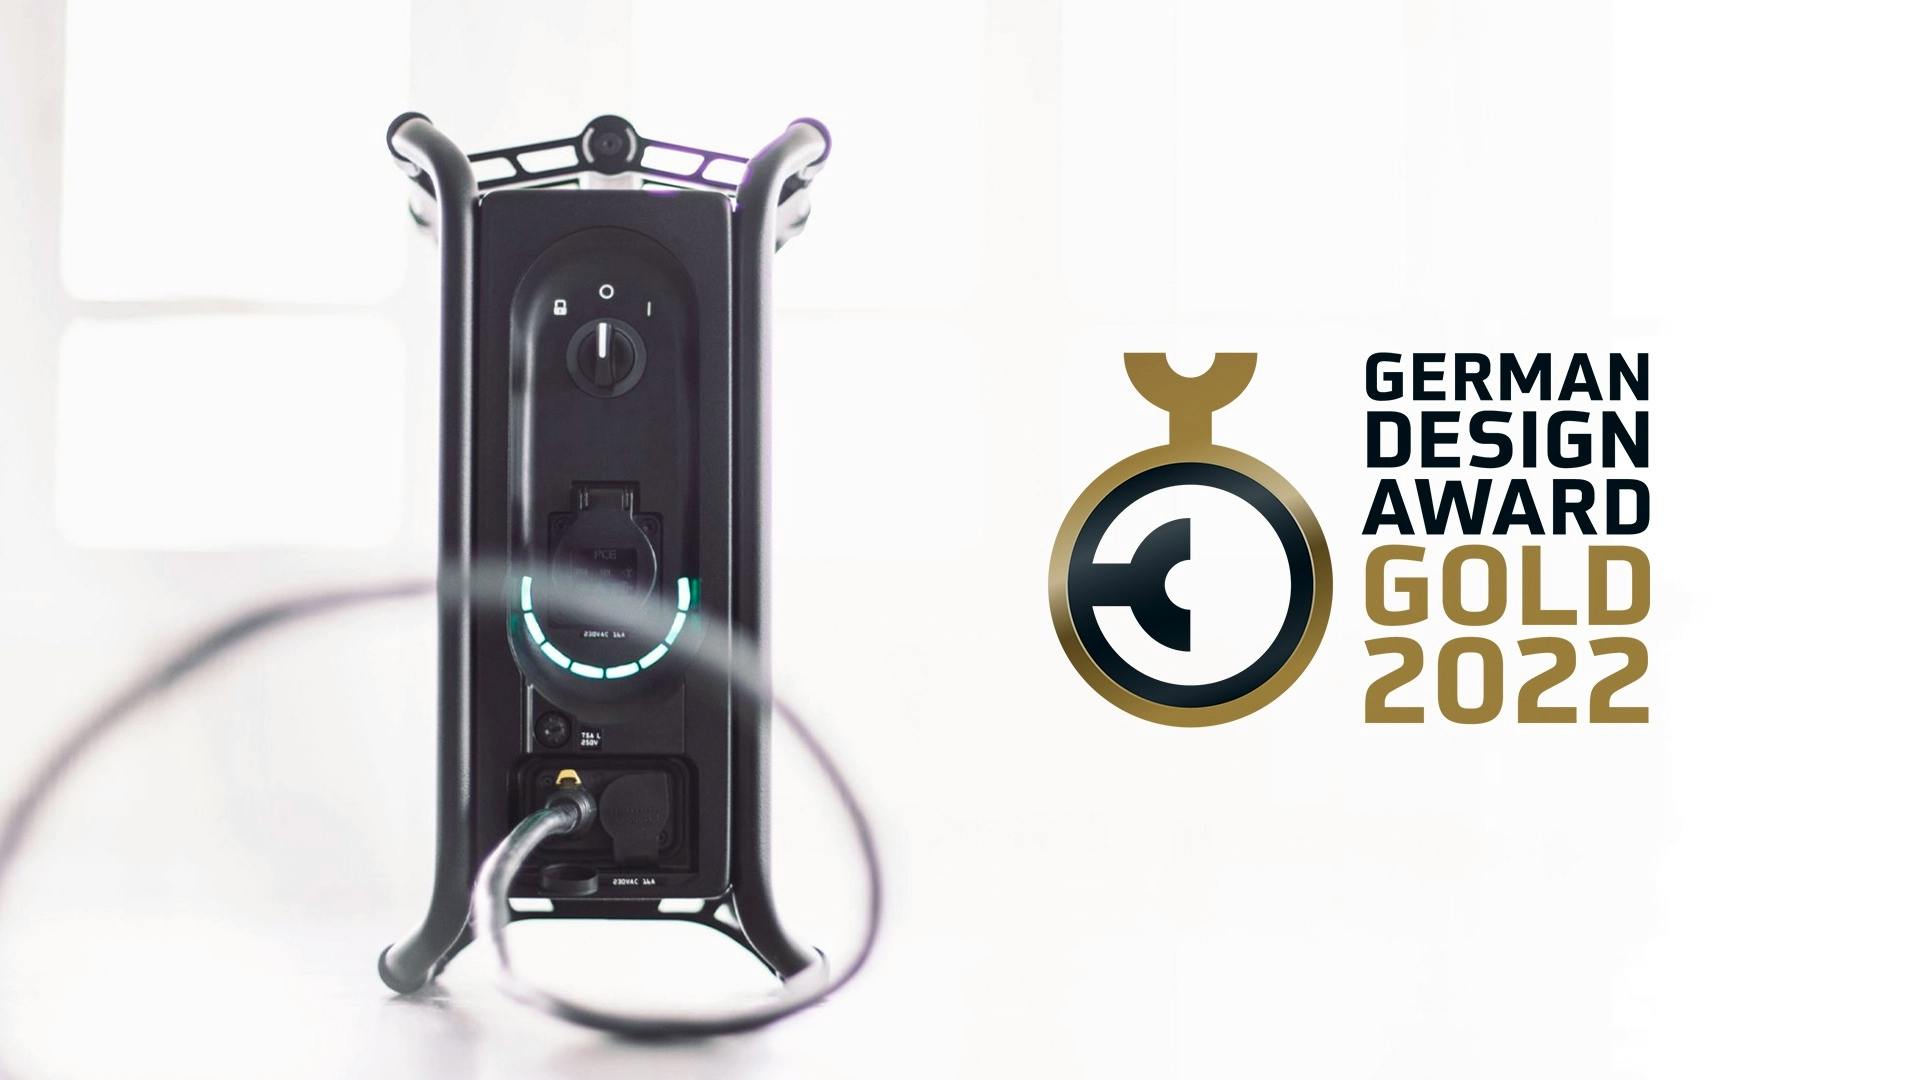 German design awards with logo